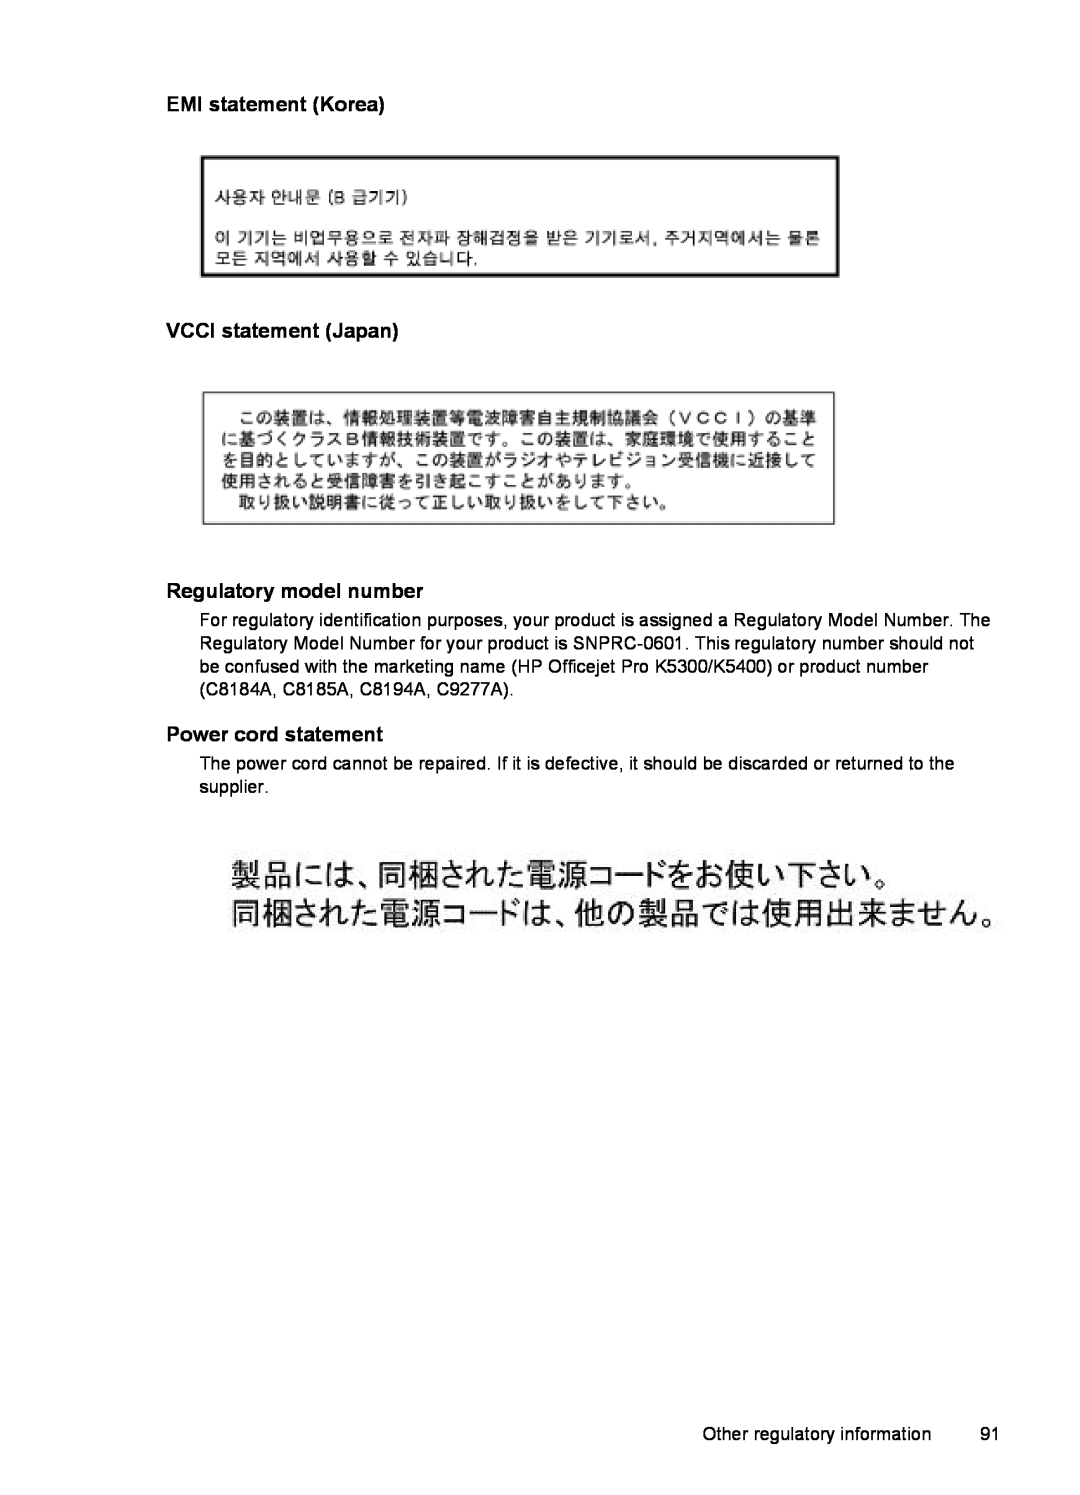 HP K5300, Pro K5400 manual EMI statement Korea VCCI statement Japan Regulatory model number, Power cord statement 